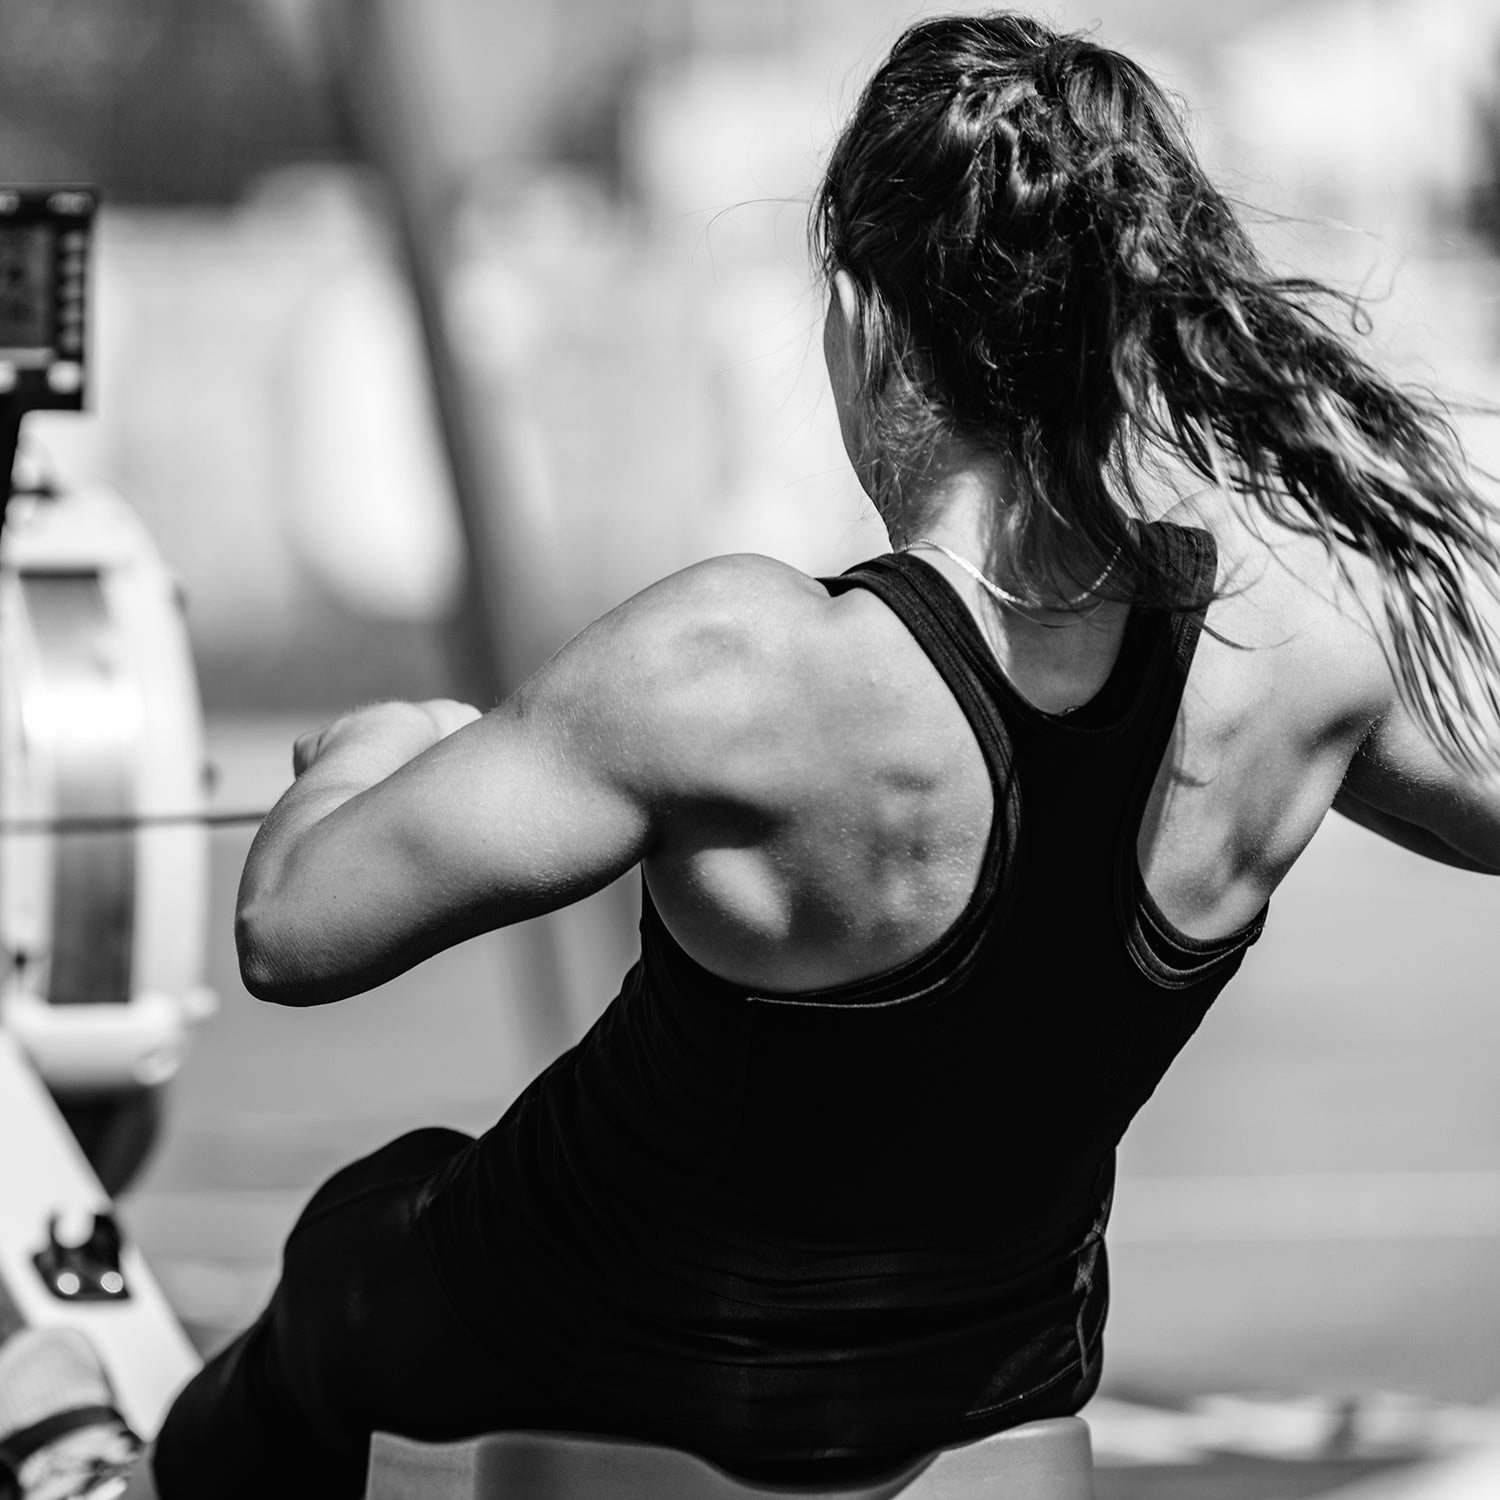  Back Exercise  Full Workout Improves Strength